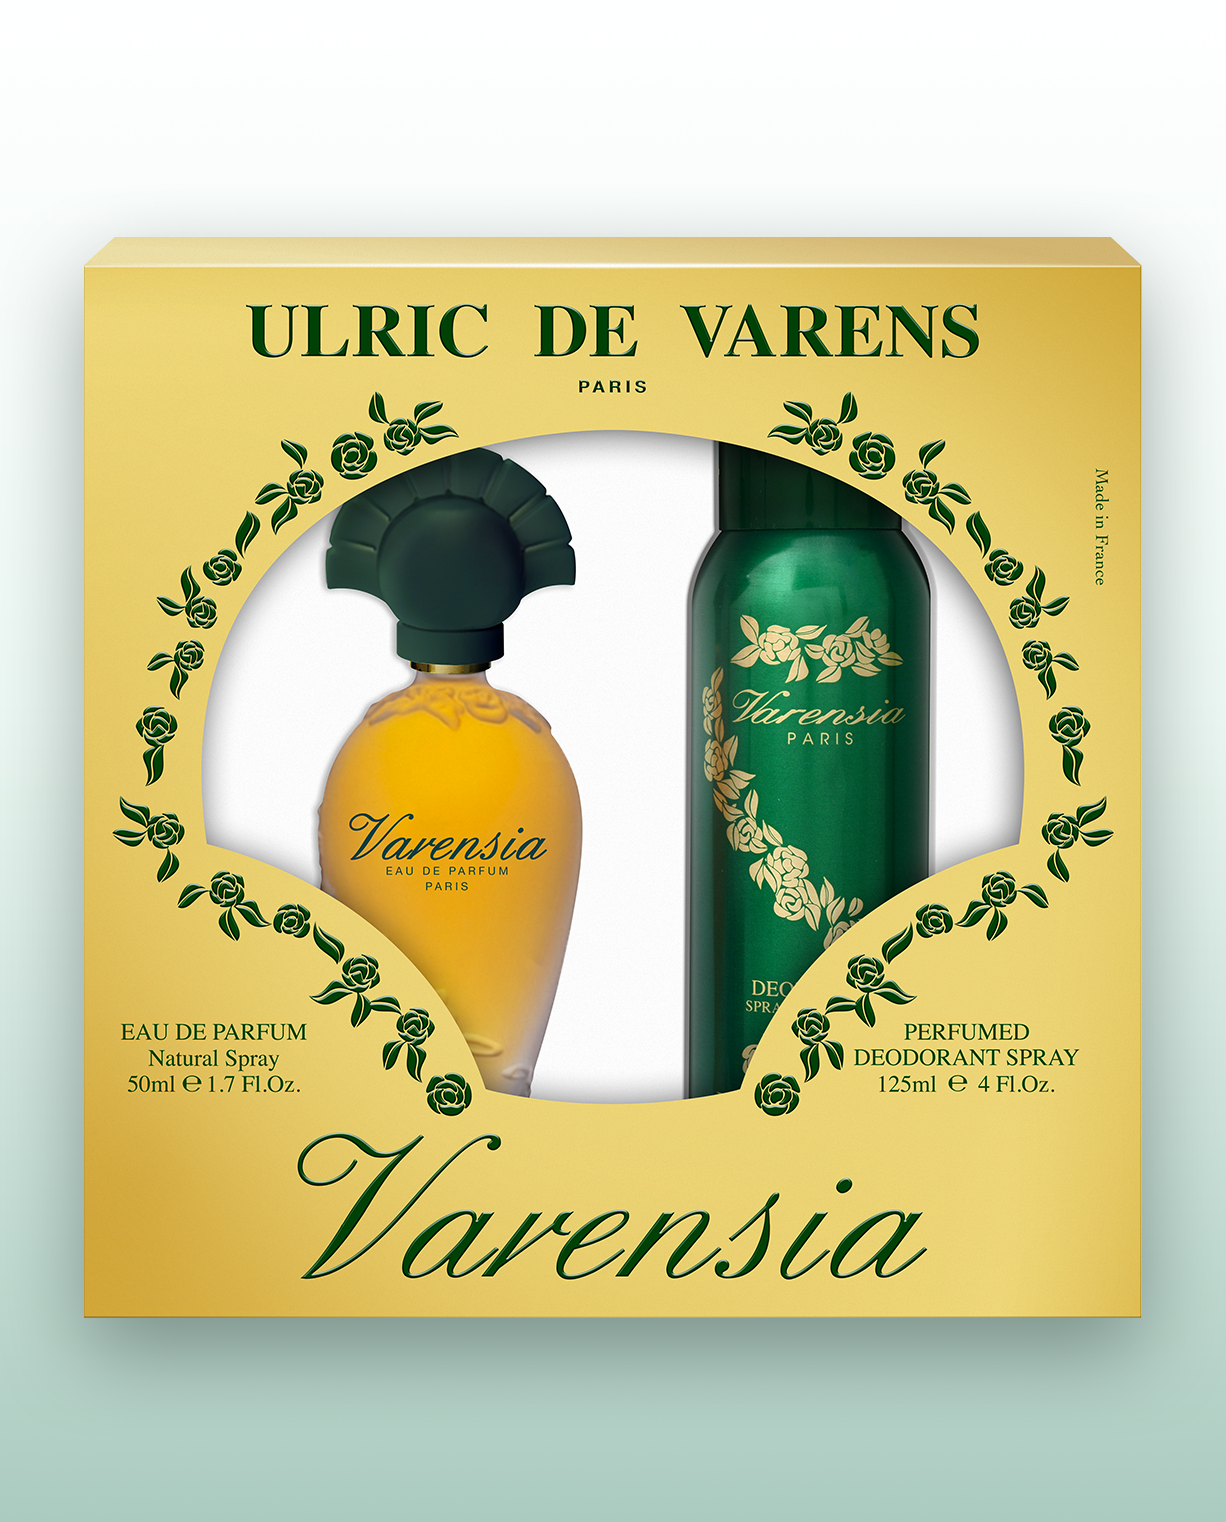 Varensia Coffret - Ulric de Varens -  - #tag1# - #tag2# - #tag3# - #tag4#